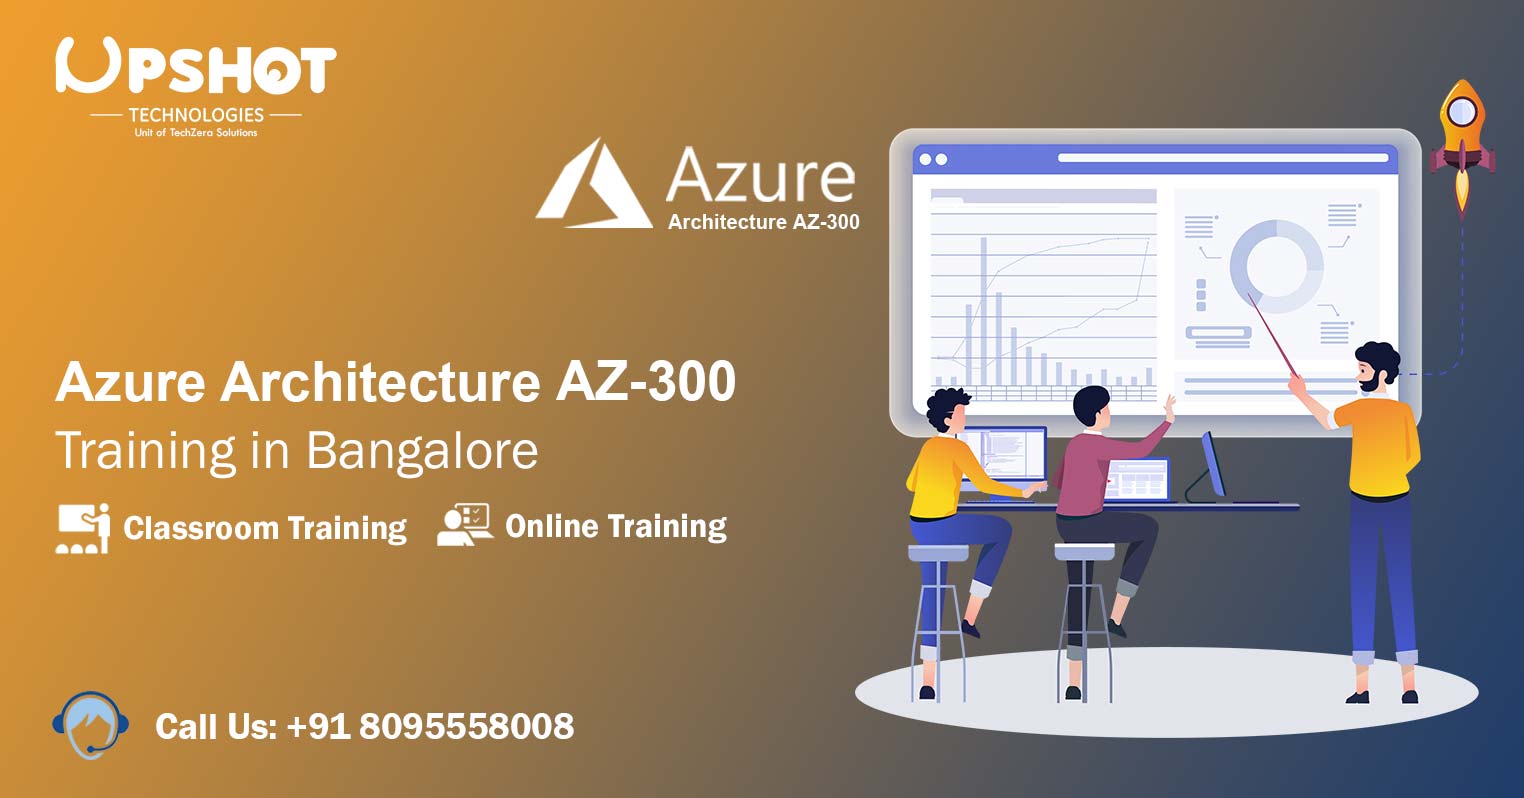 Azure architecture training in bangalore